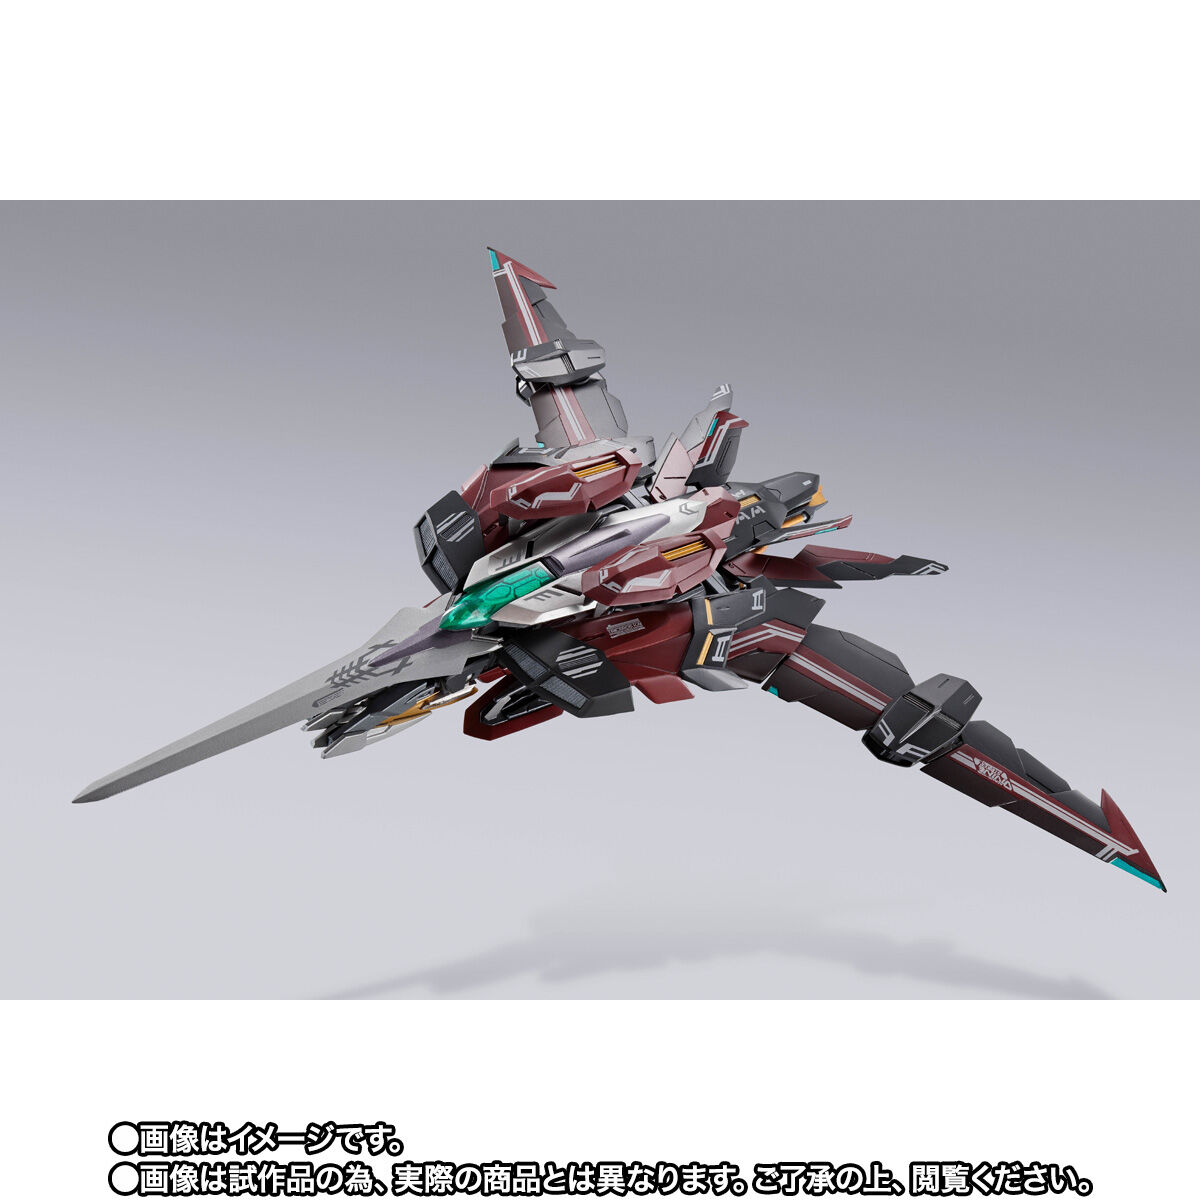 Metal Build AQM/E-X05 Divine Striker for Gundam Seed Series(Alternative Strike)